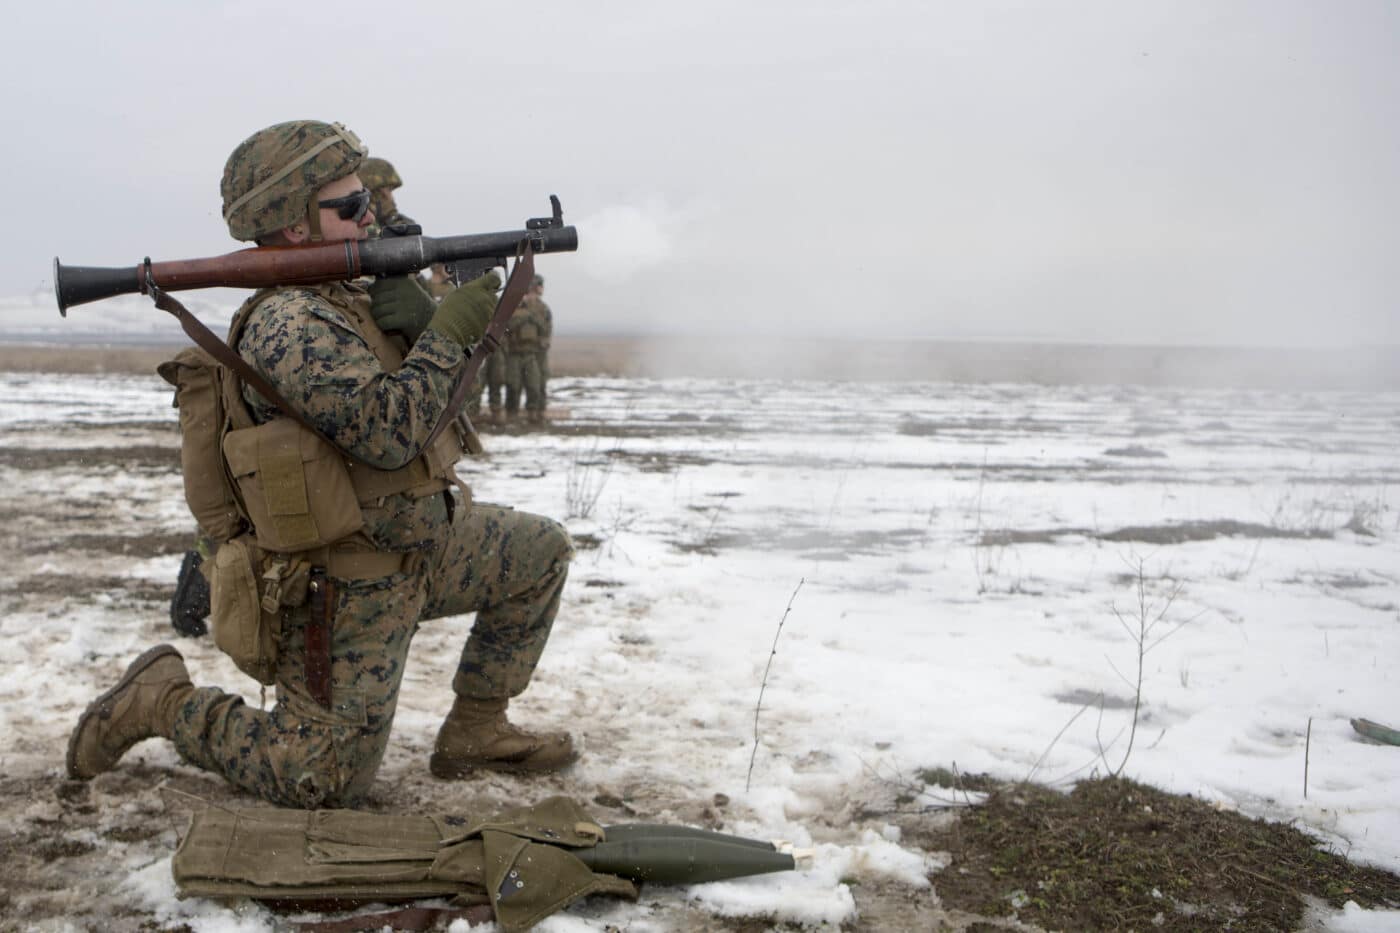 U.S. Marine firing an RPG during training